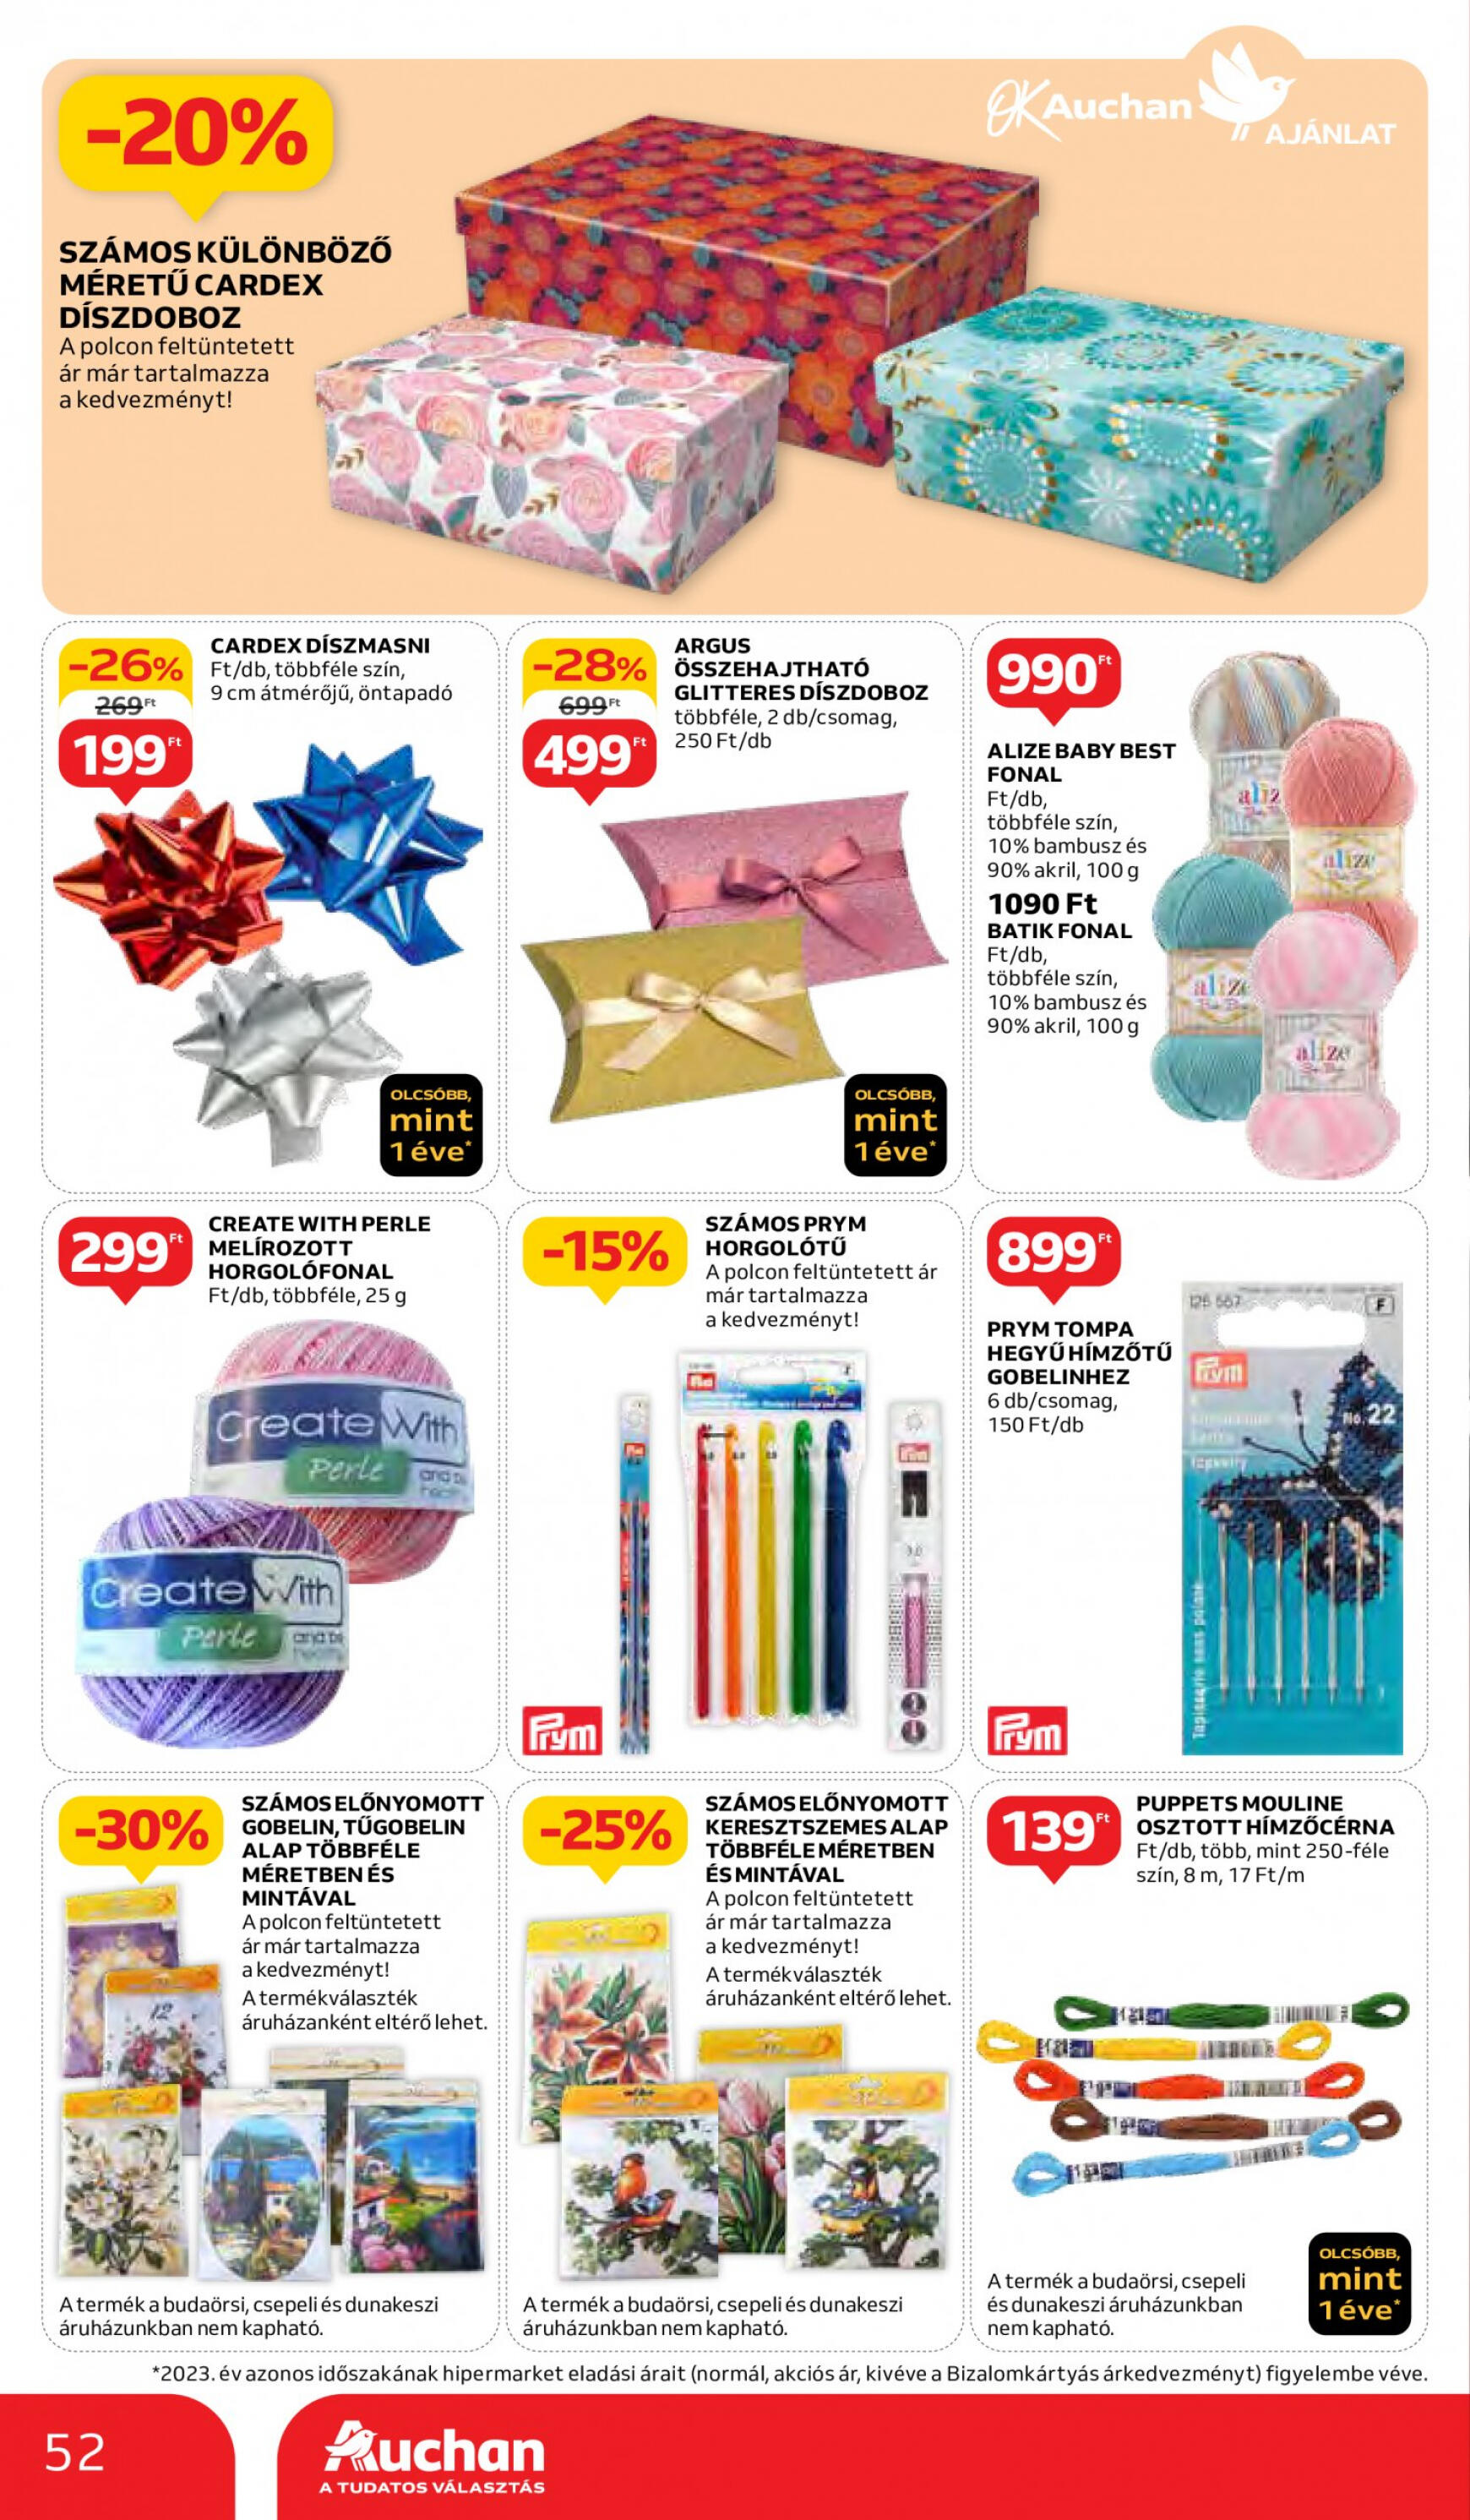 auchan - Aktuális újság Auchan 05.02. - 05.08. - page: 52